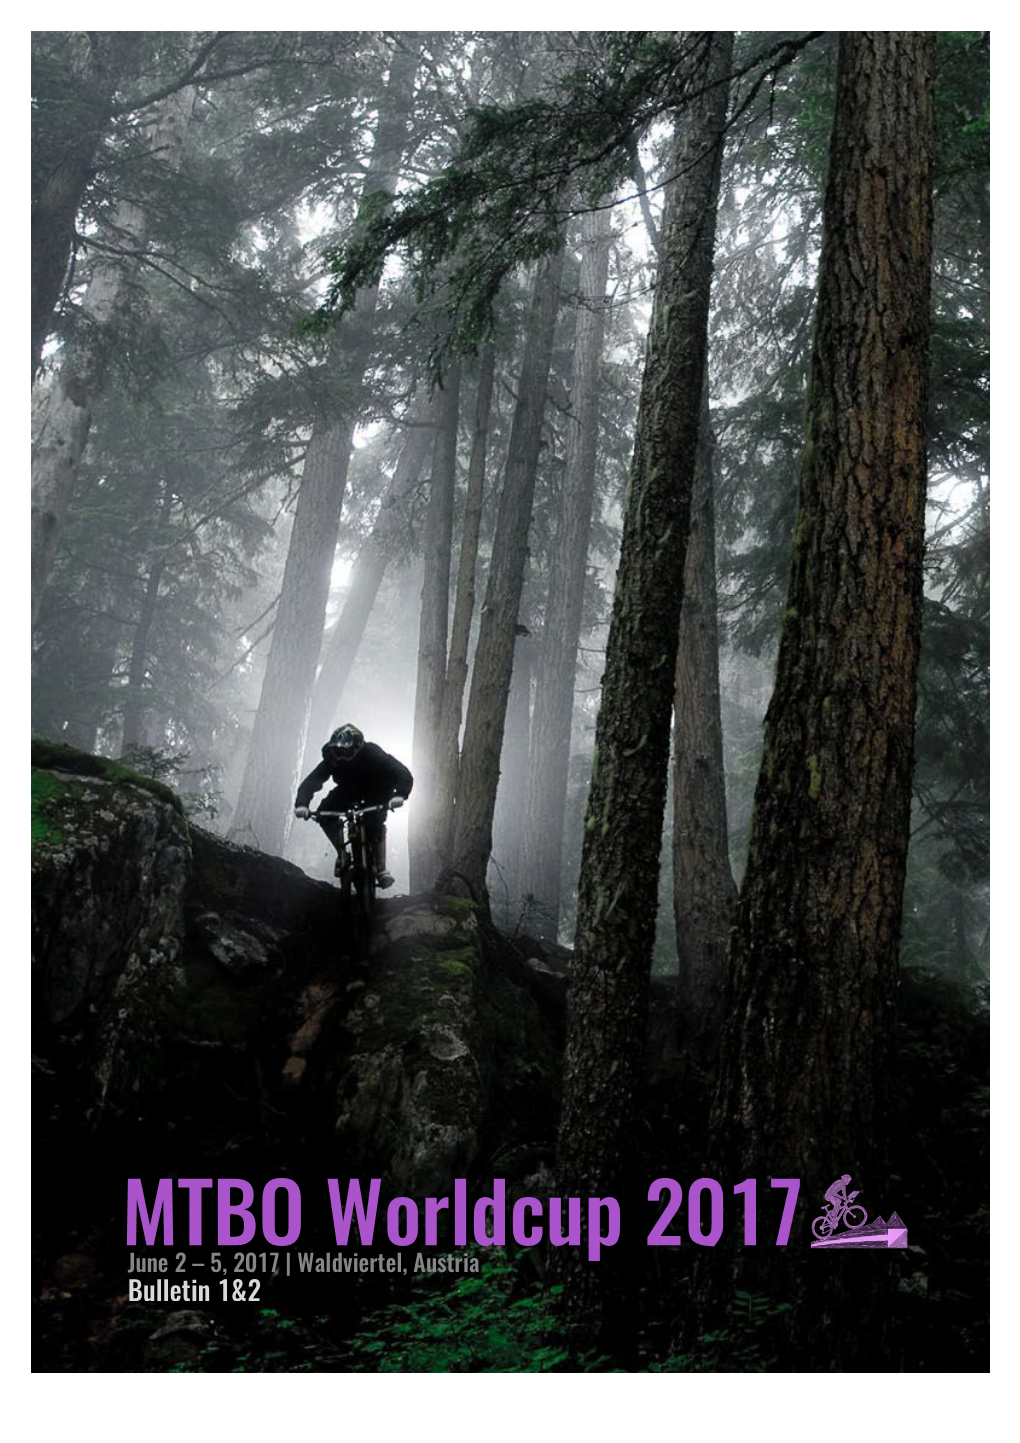 MTBO Worldcup 2017 June 2 – 5, 2017 | Waldviertel, Austria Bulletin 1&2